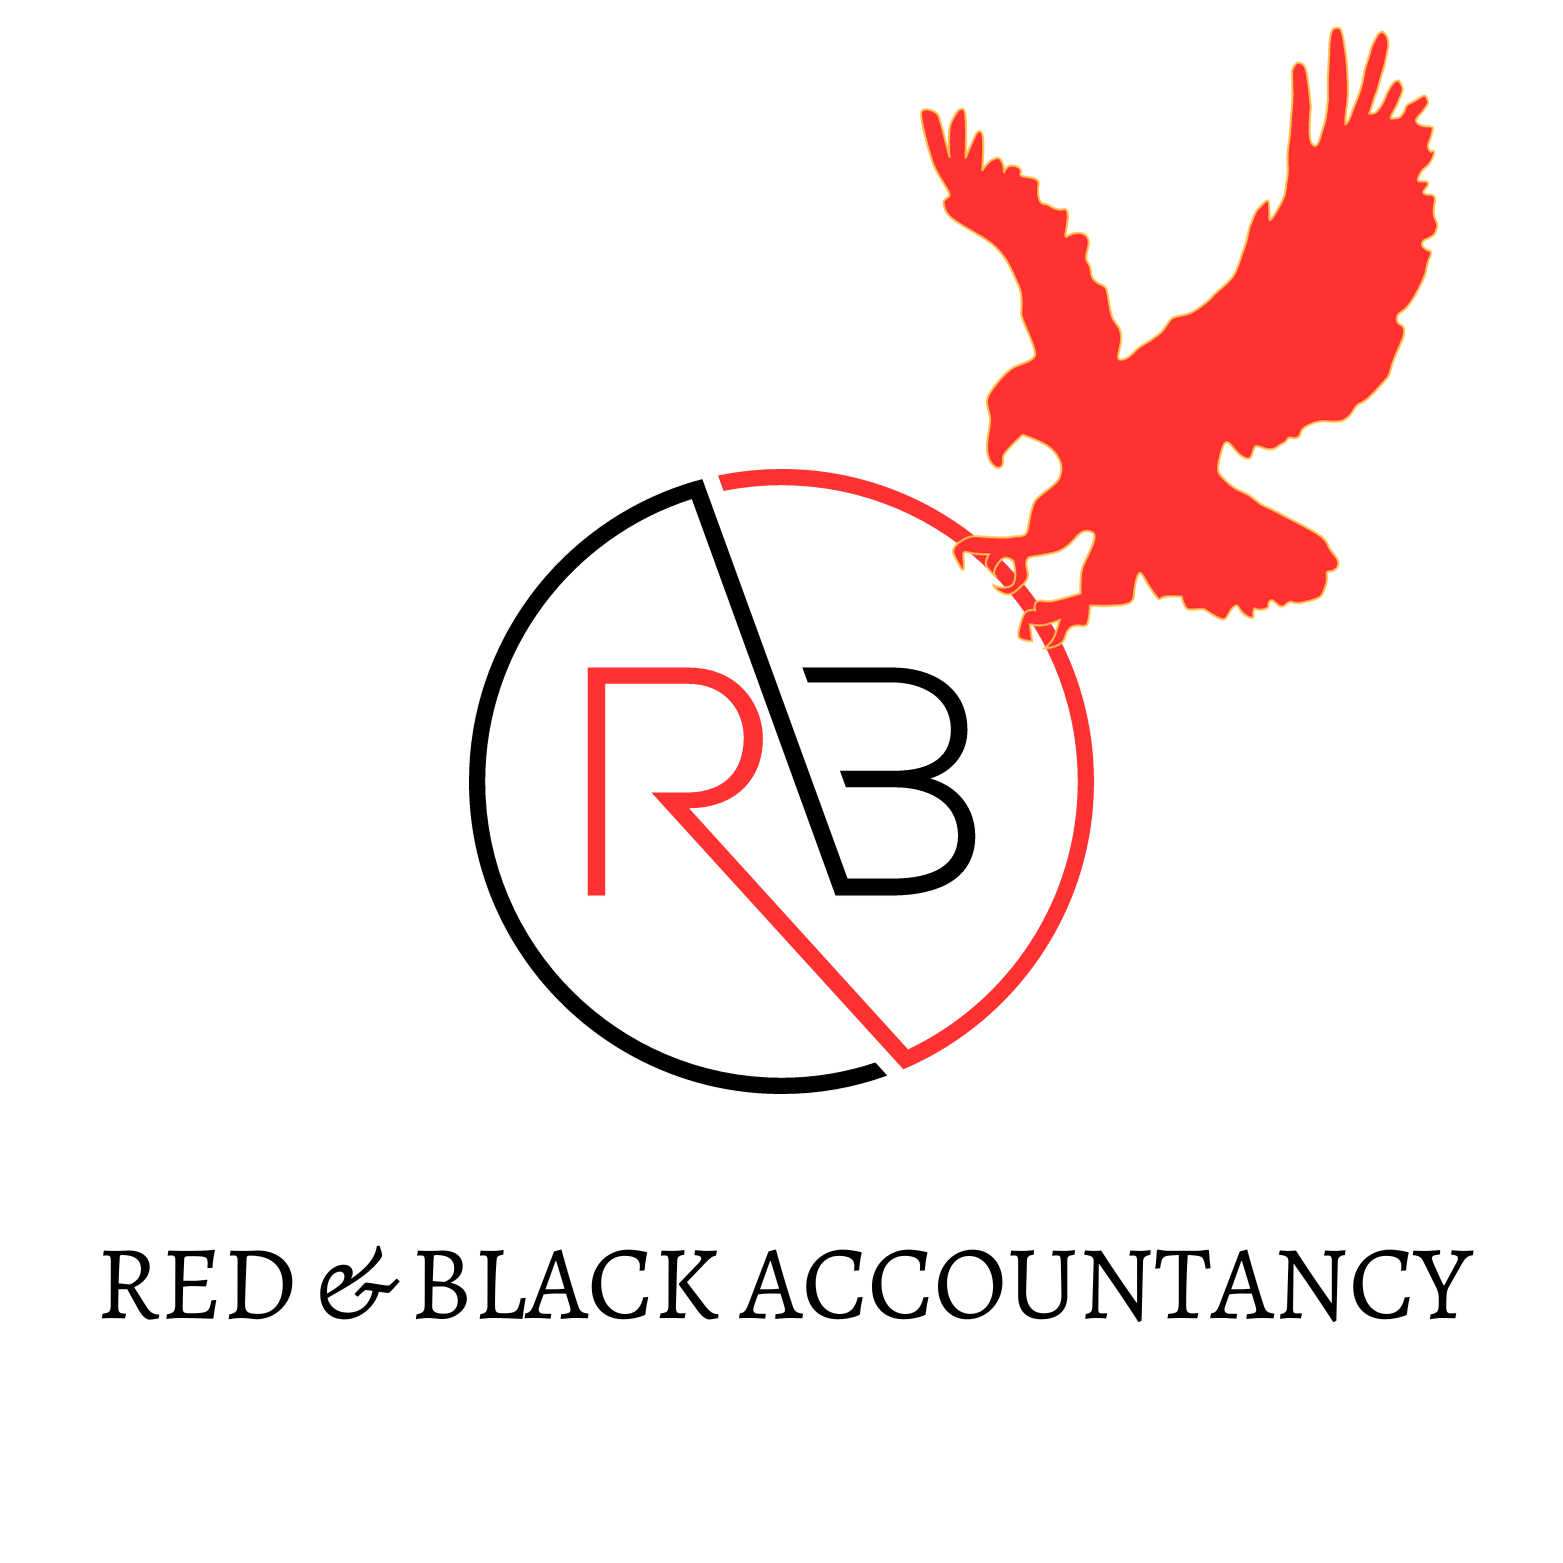 Red & Black Accountancy